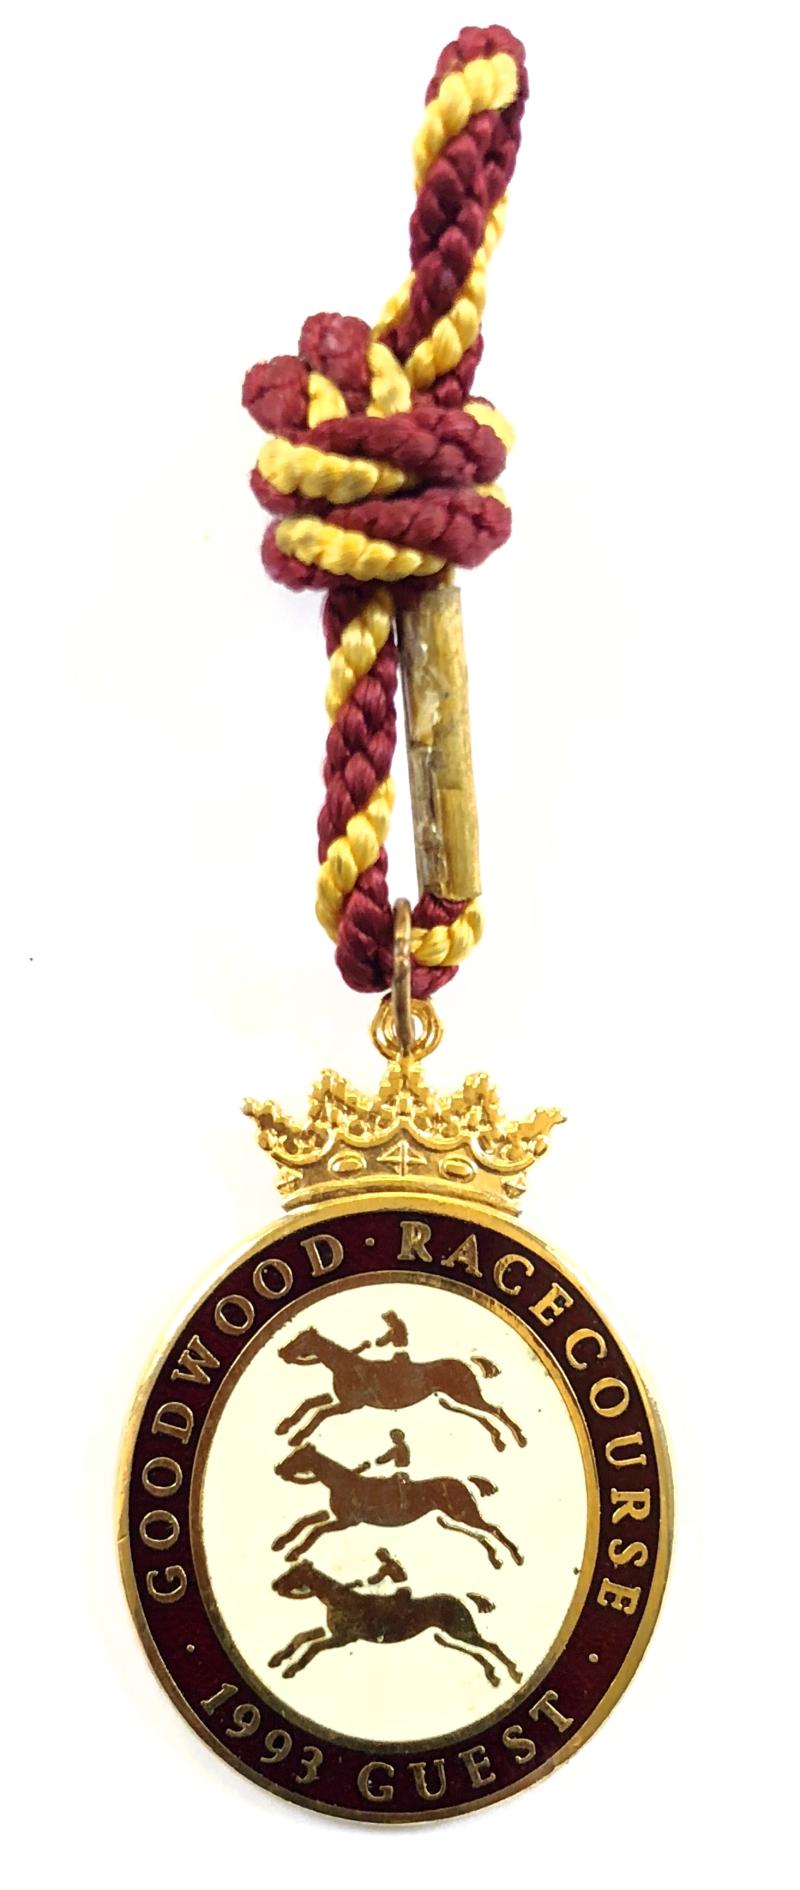 Goodwood Racecourse 1993 Guest horse race badge